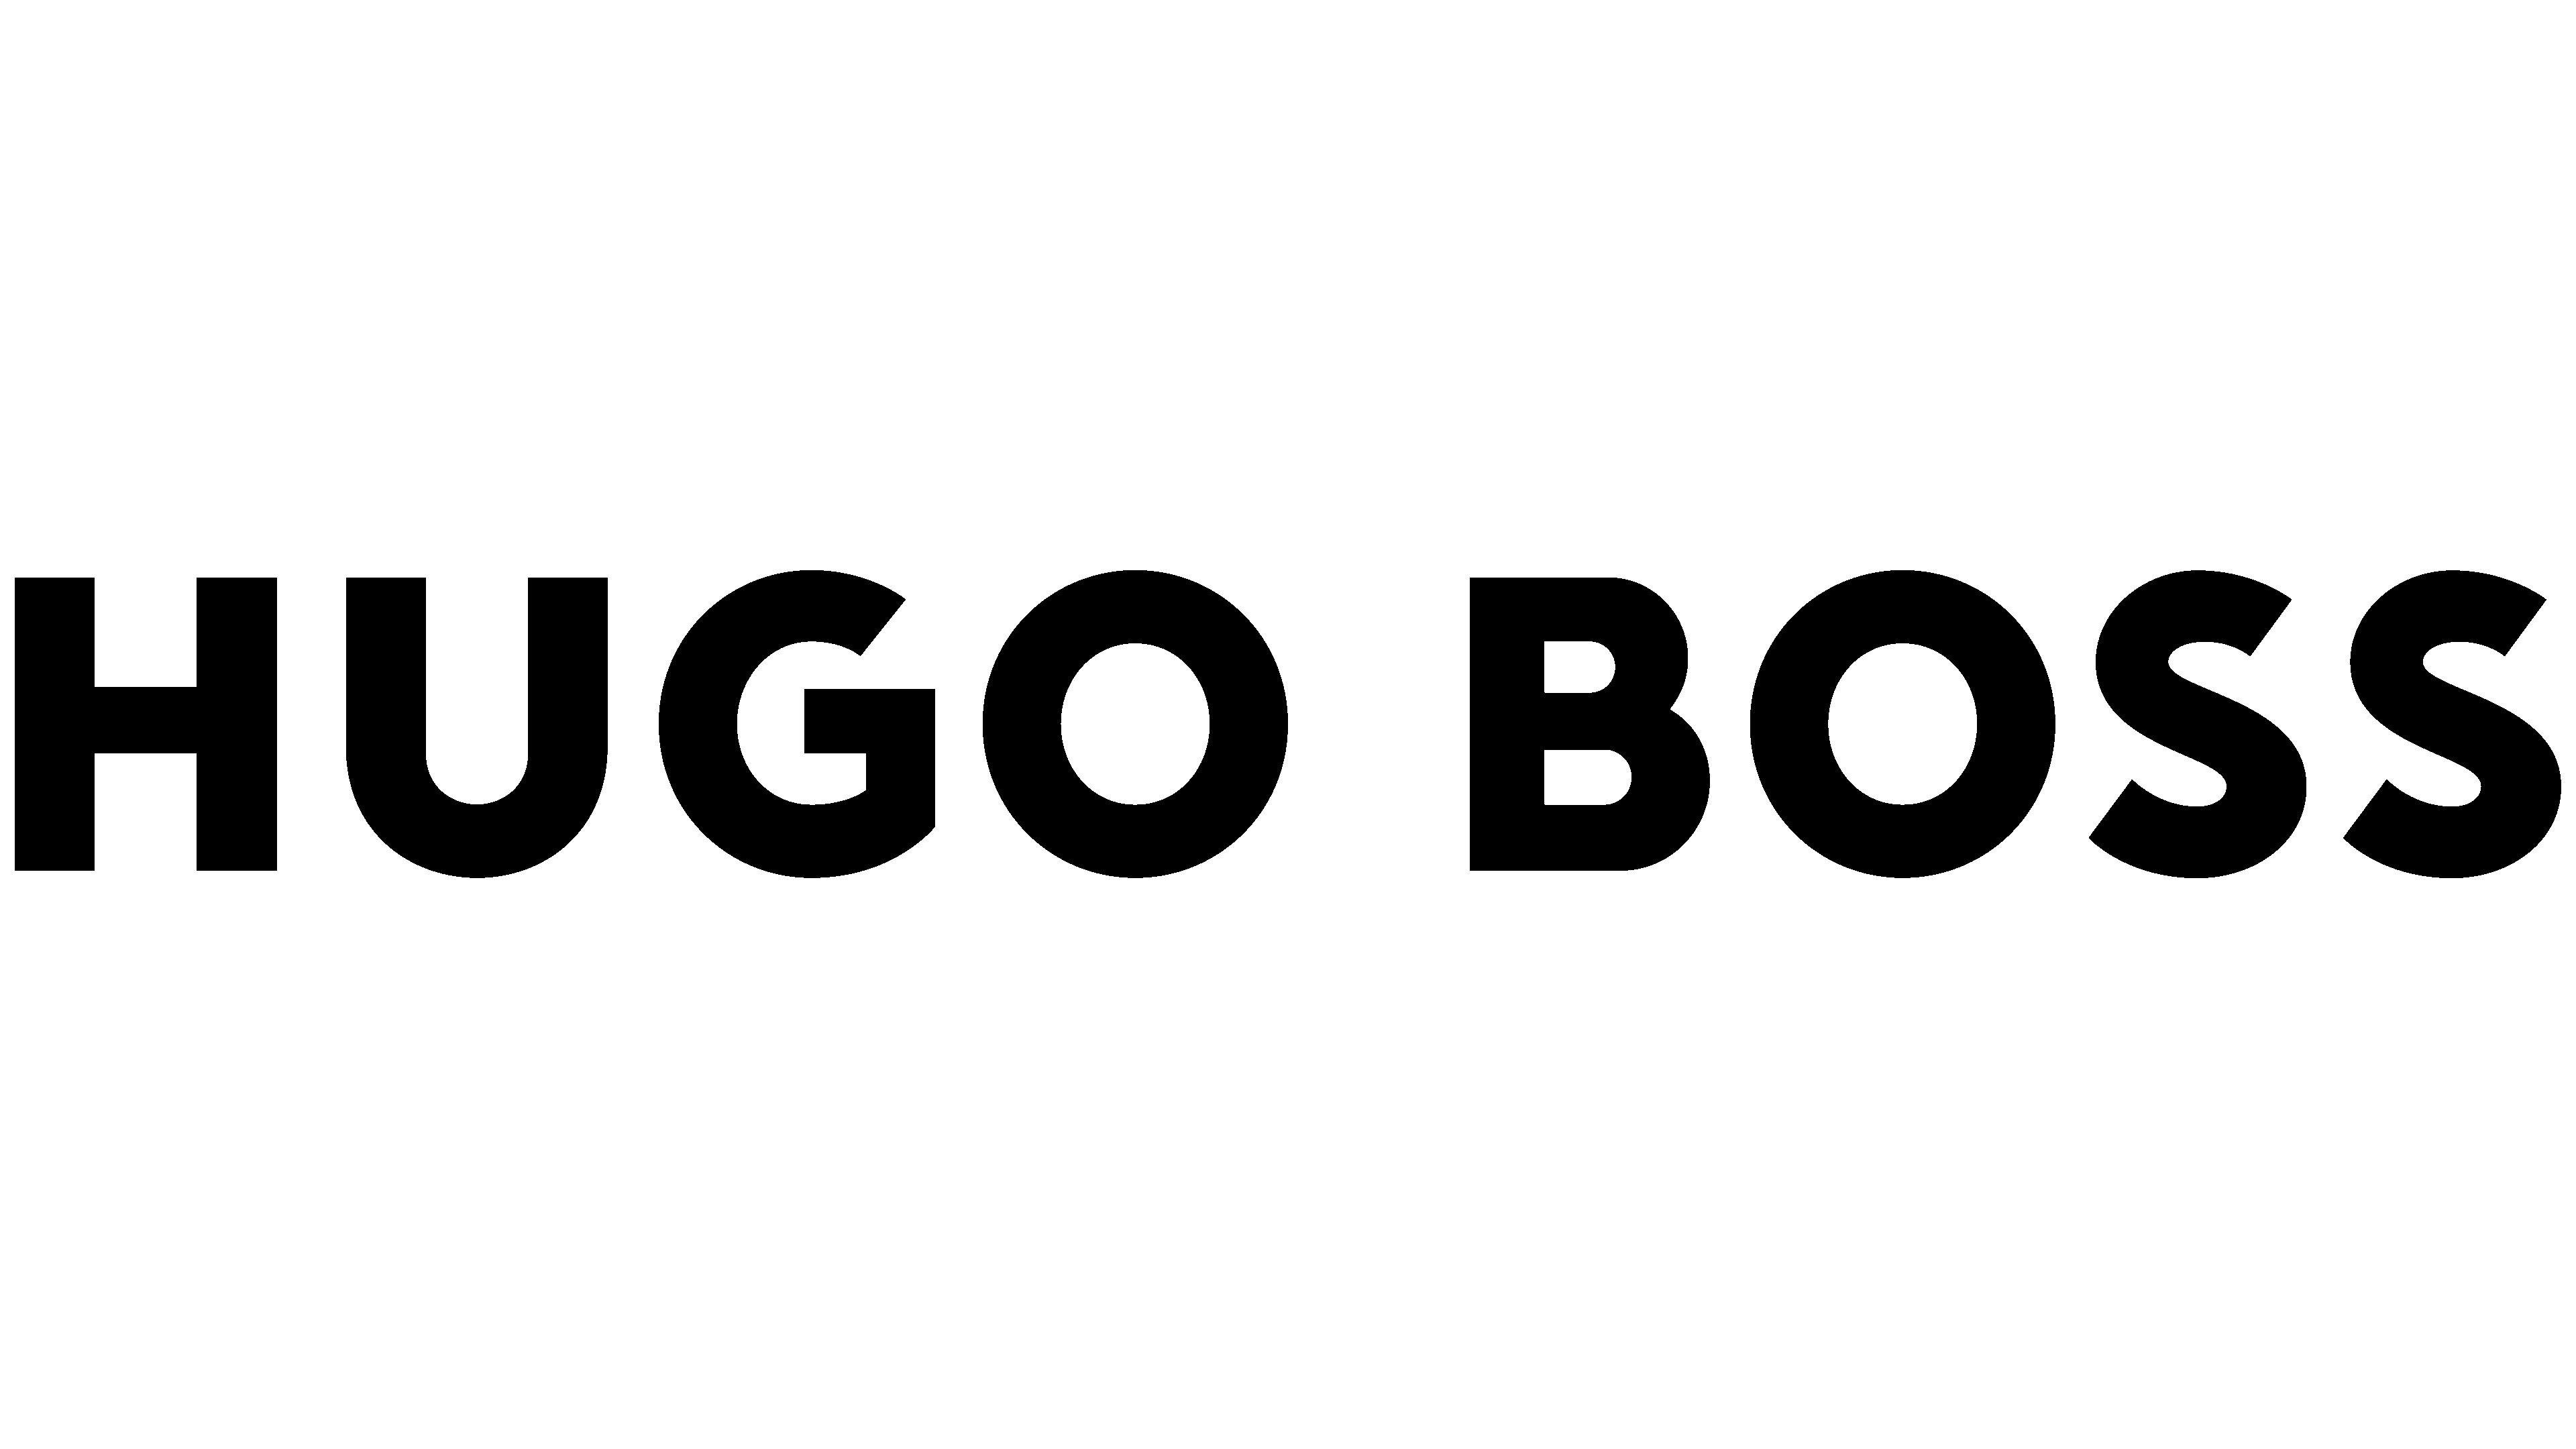 Hugo Boss Coupons & Promo Codes